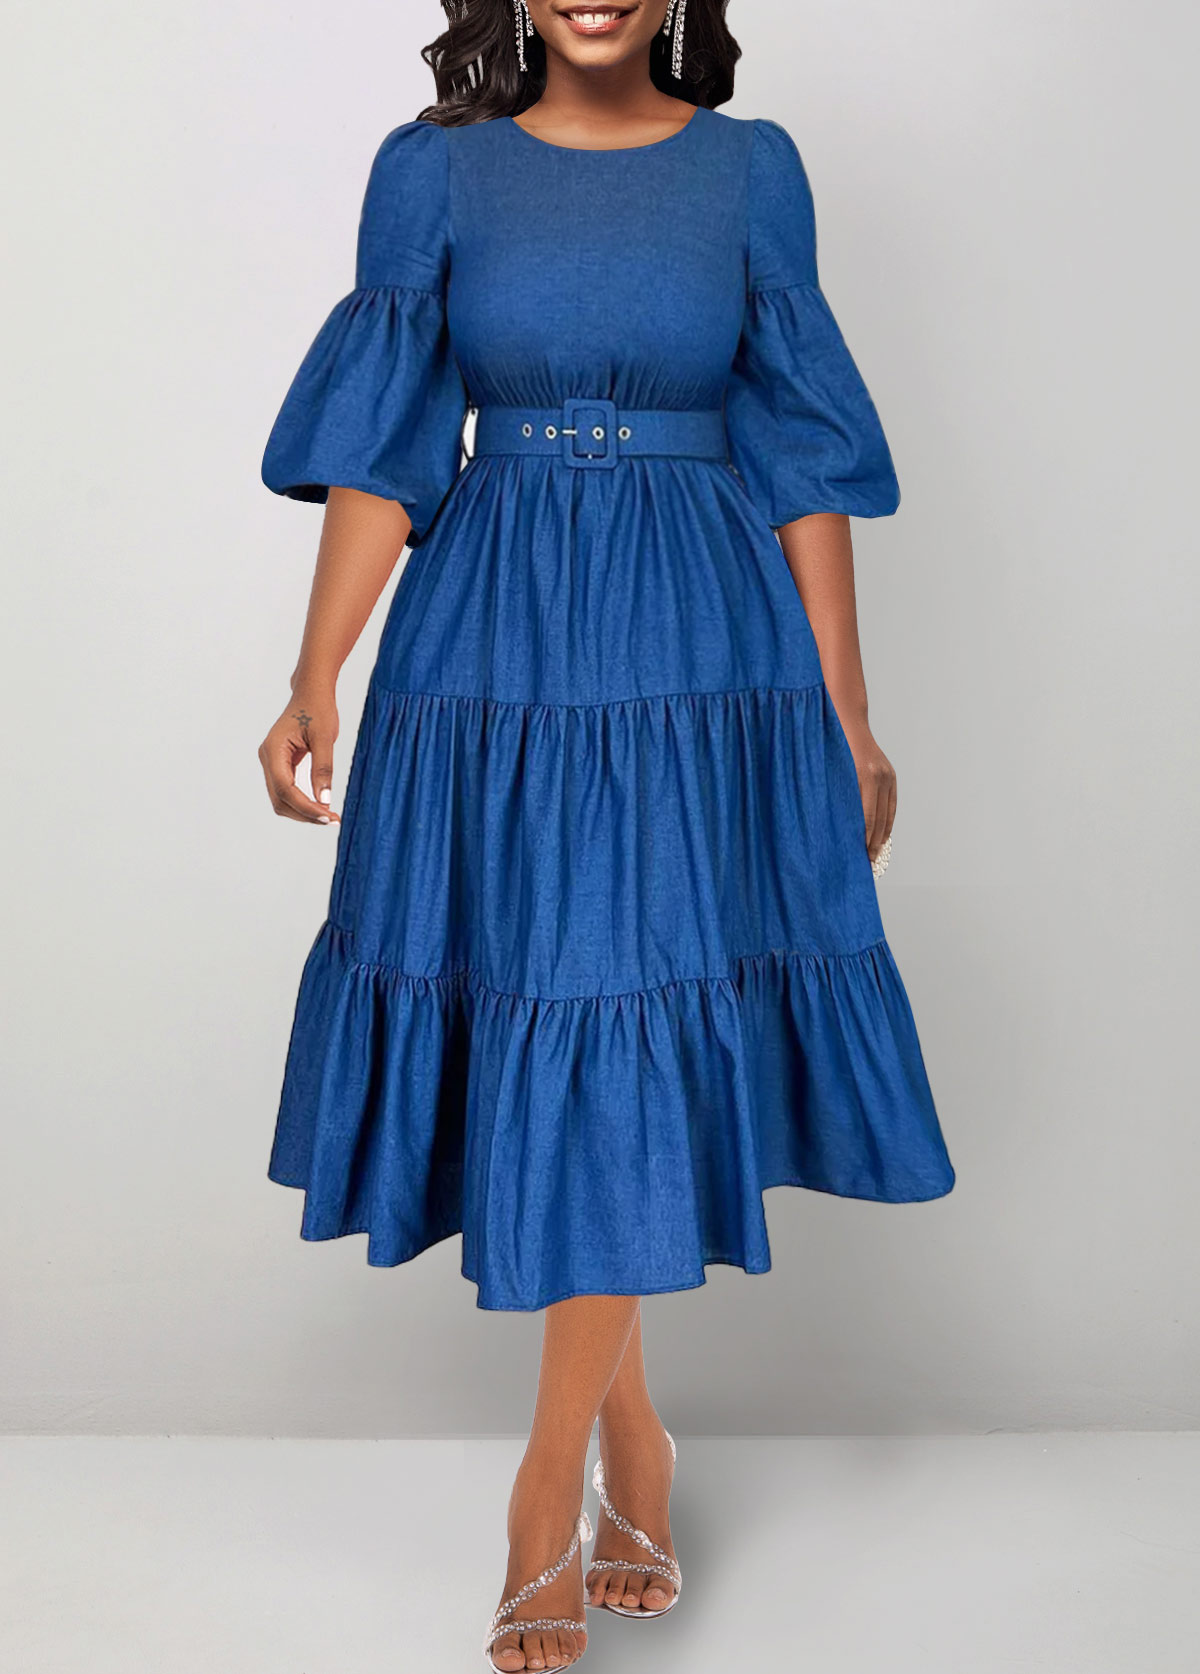 Ruched Belted Denim Blue Round Neck Dress | Rosewe.com - USD $44.98